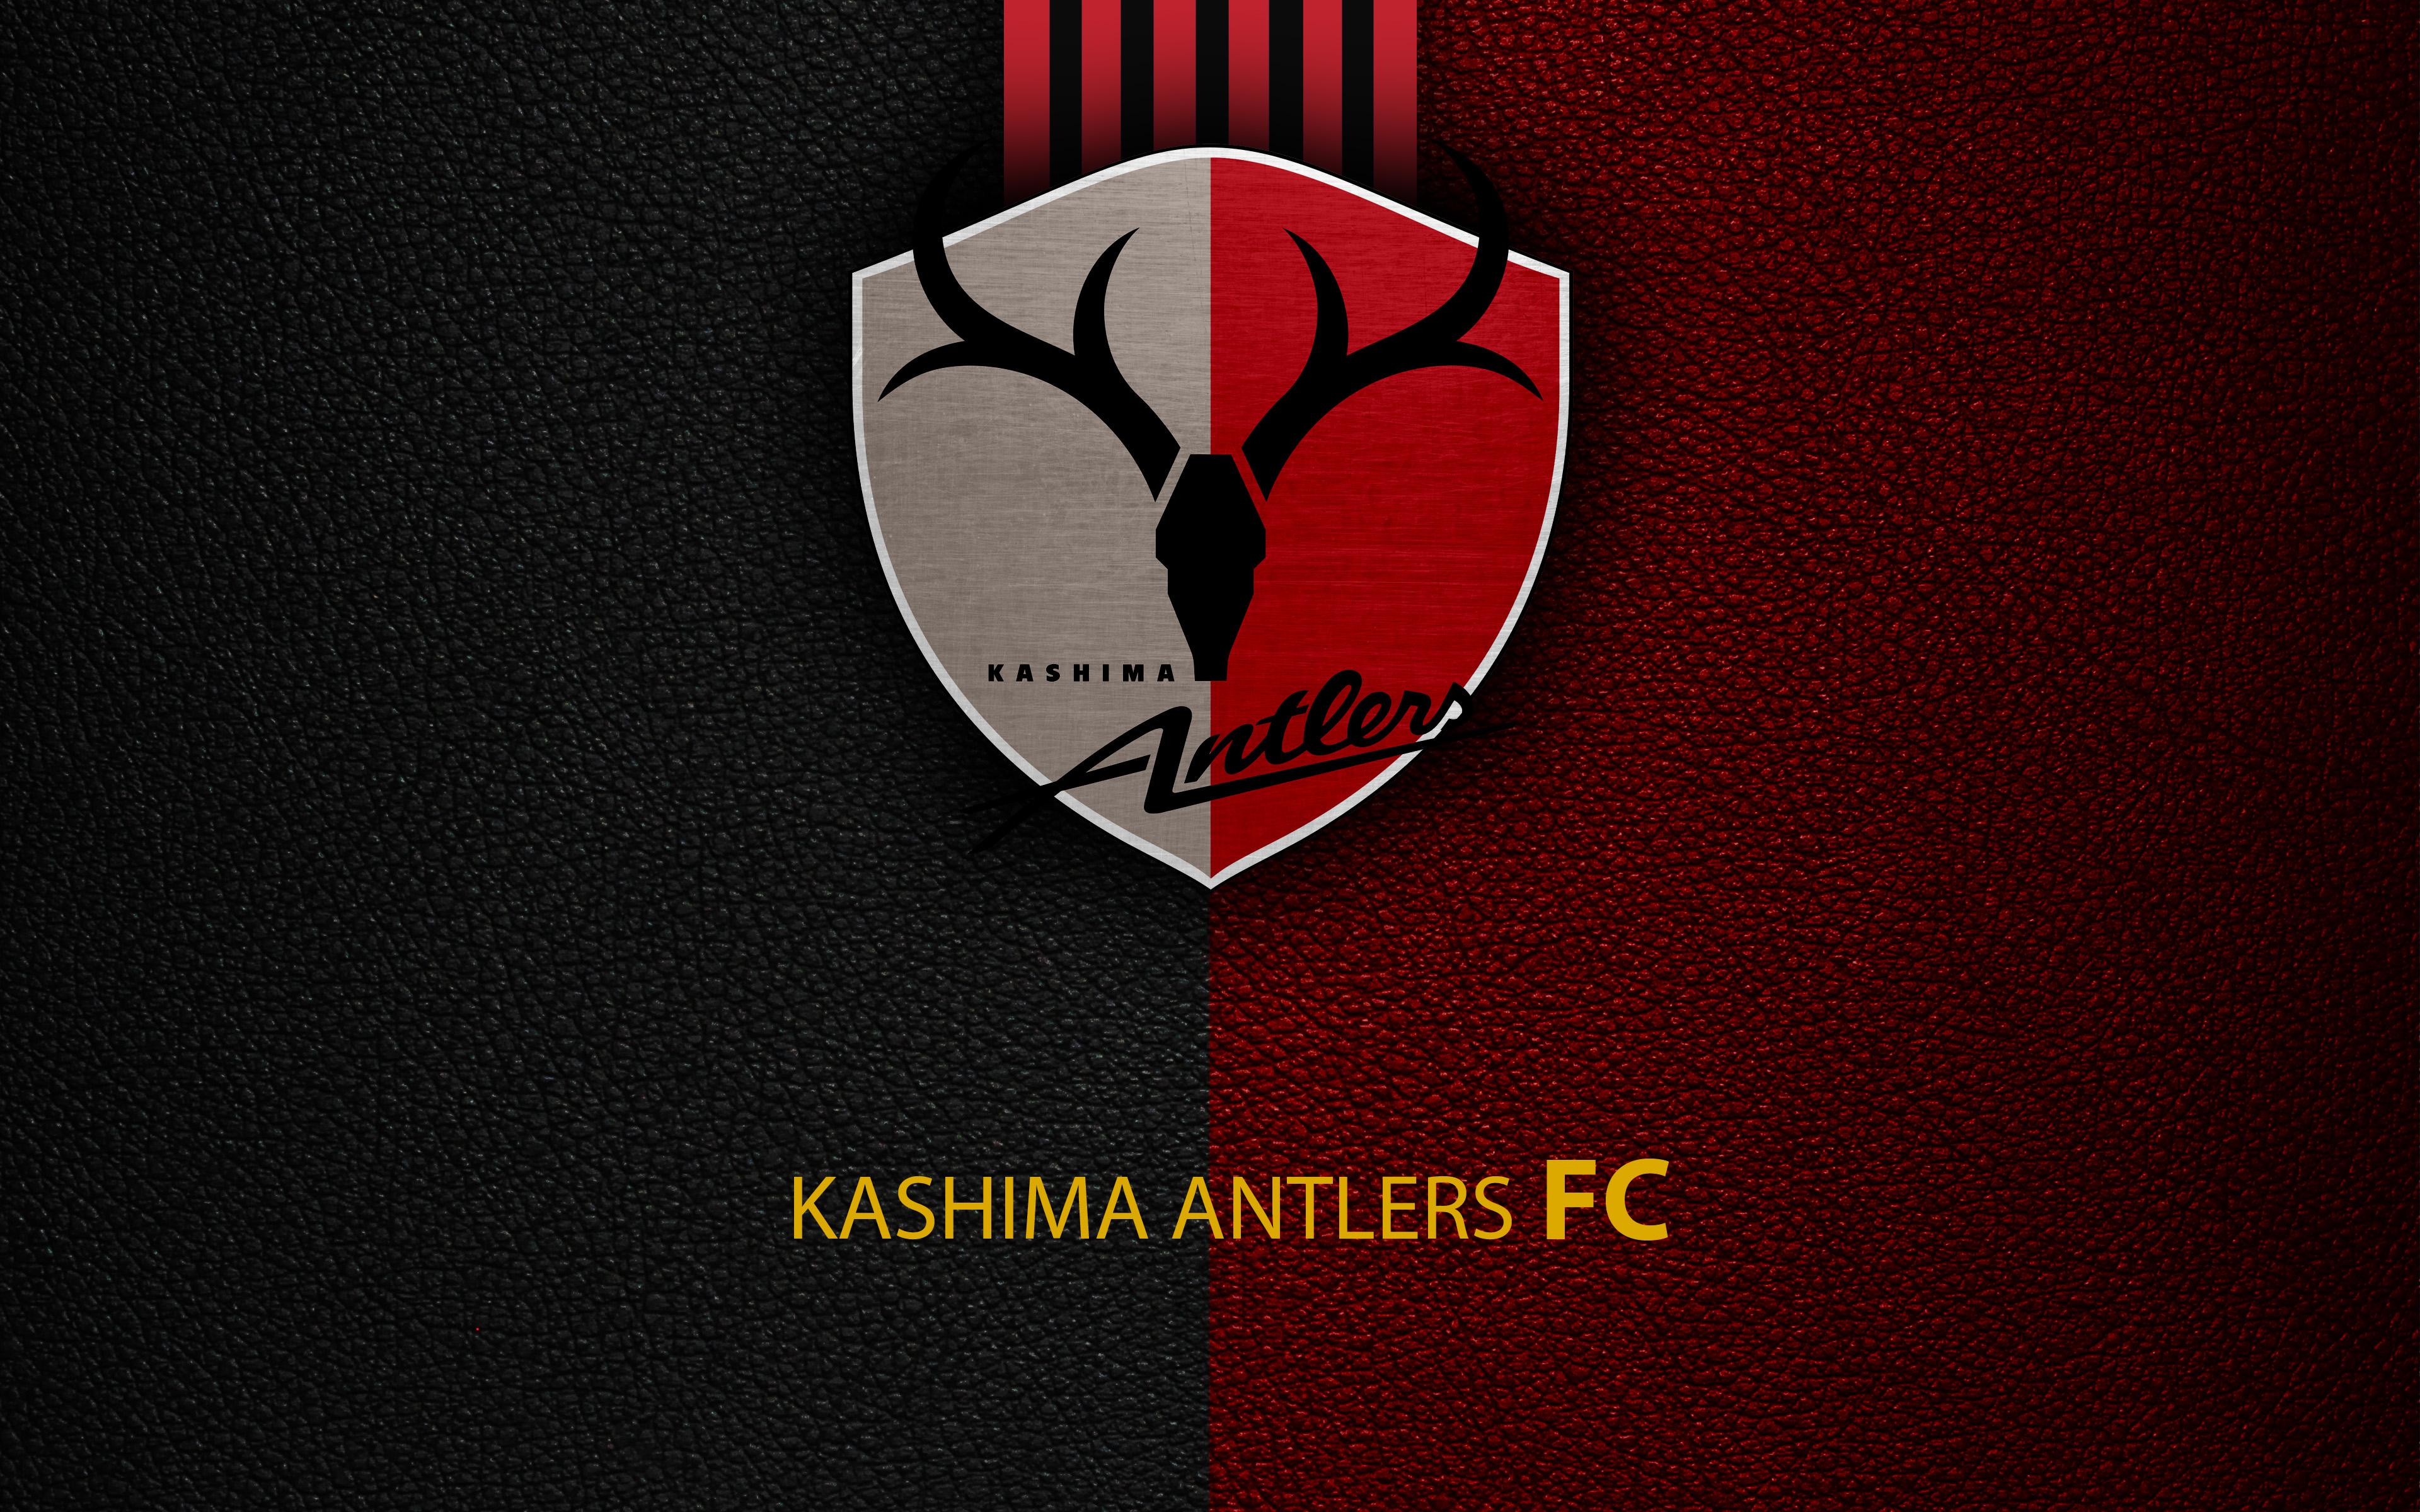 Kashima Antlers Logo 4k Ultra HD Wallpaper. Background Image